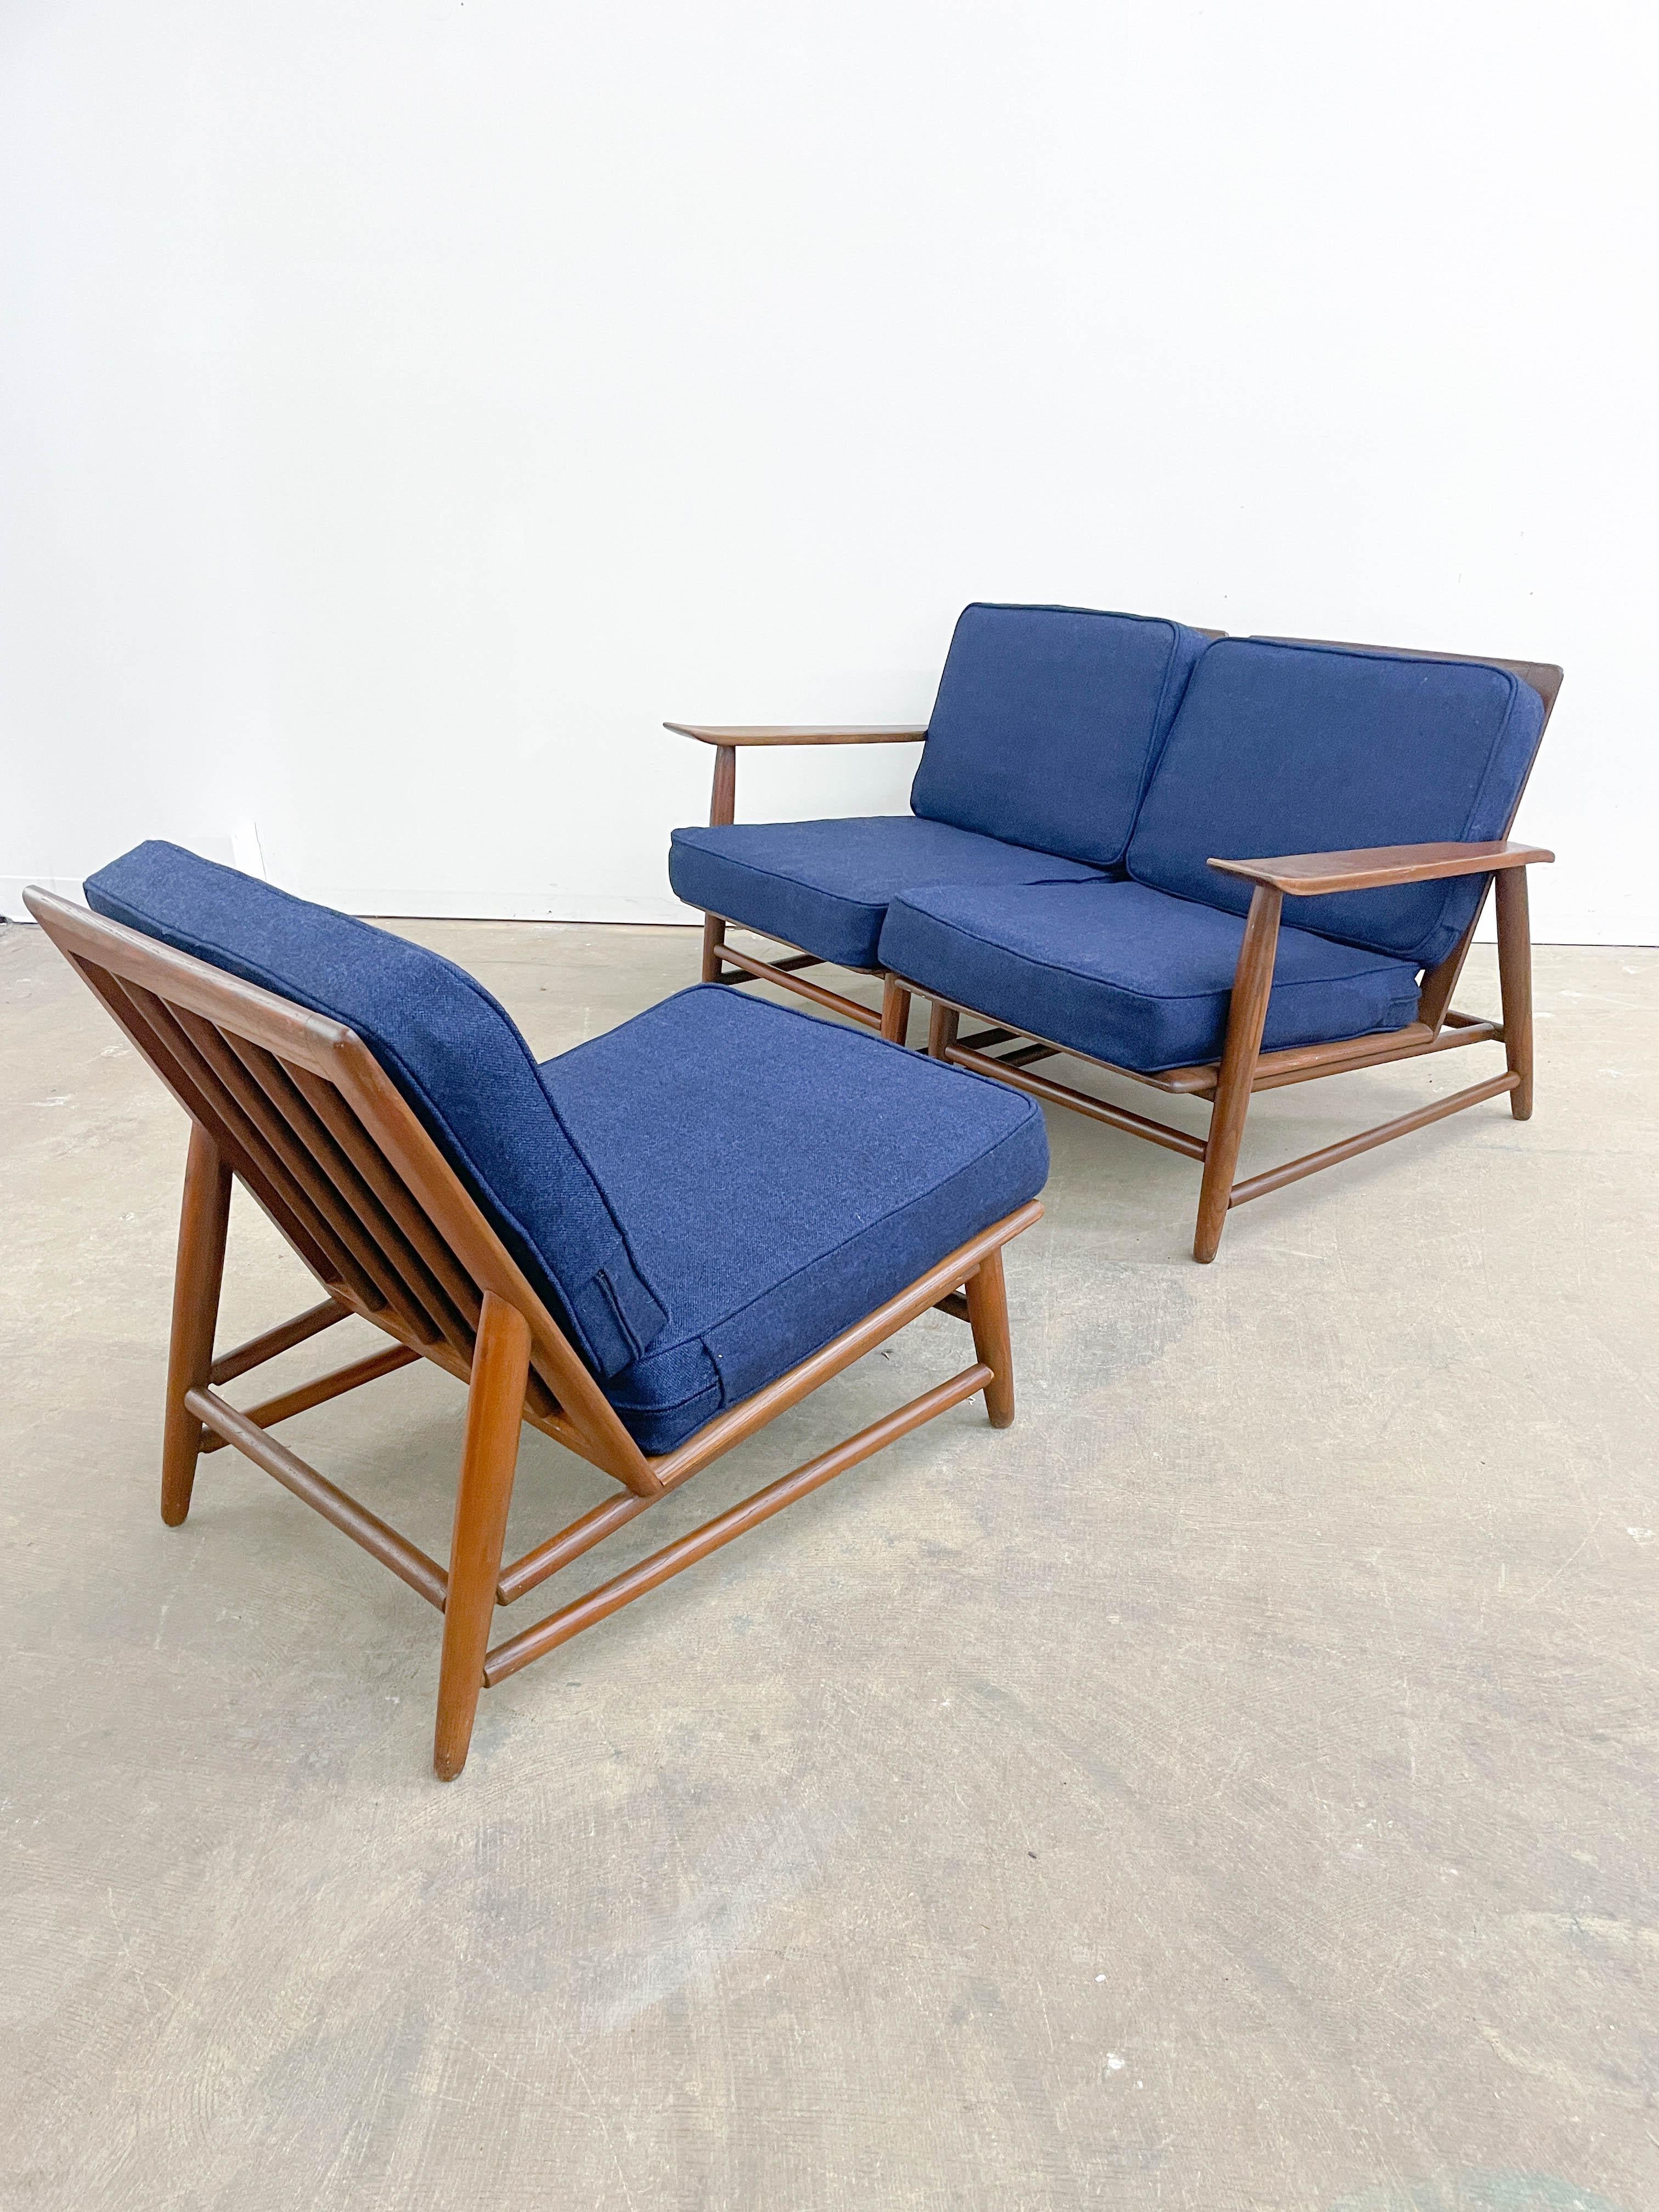 Haywood Wakefield Nakashima style modular seating In Good Condition In Kalamazoo, MI